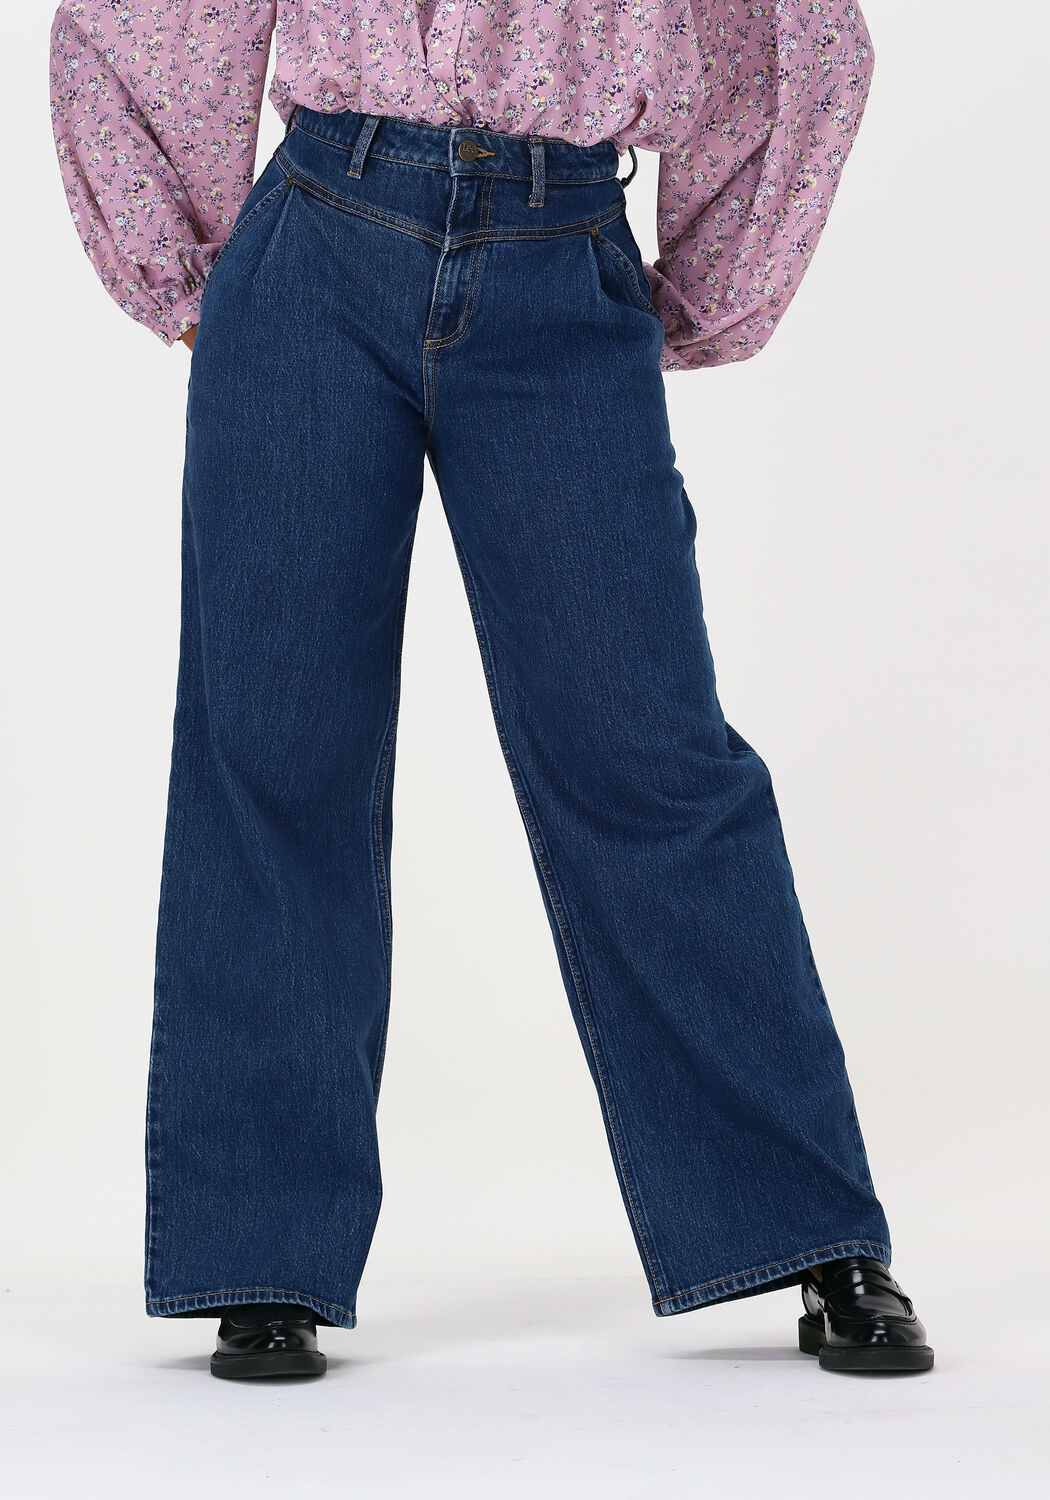 Damen Bekleidung Jeans Ausgestellte Jeans Lee Jeans Denim Wide Jeans Stella A Line Yoke in Blau 